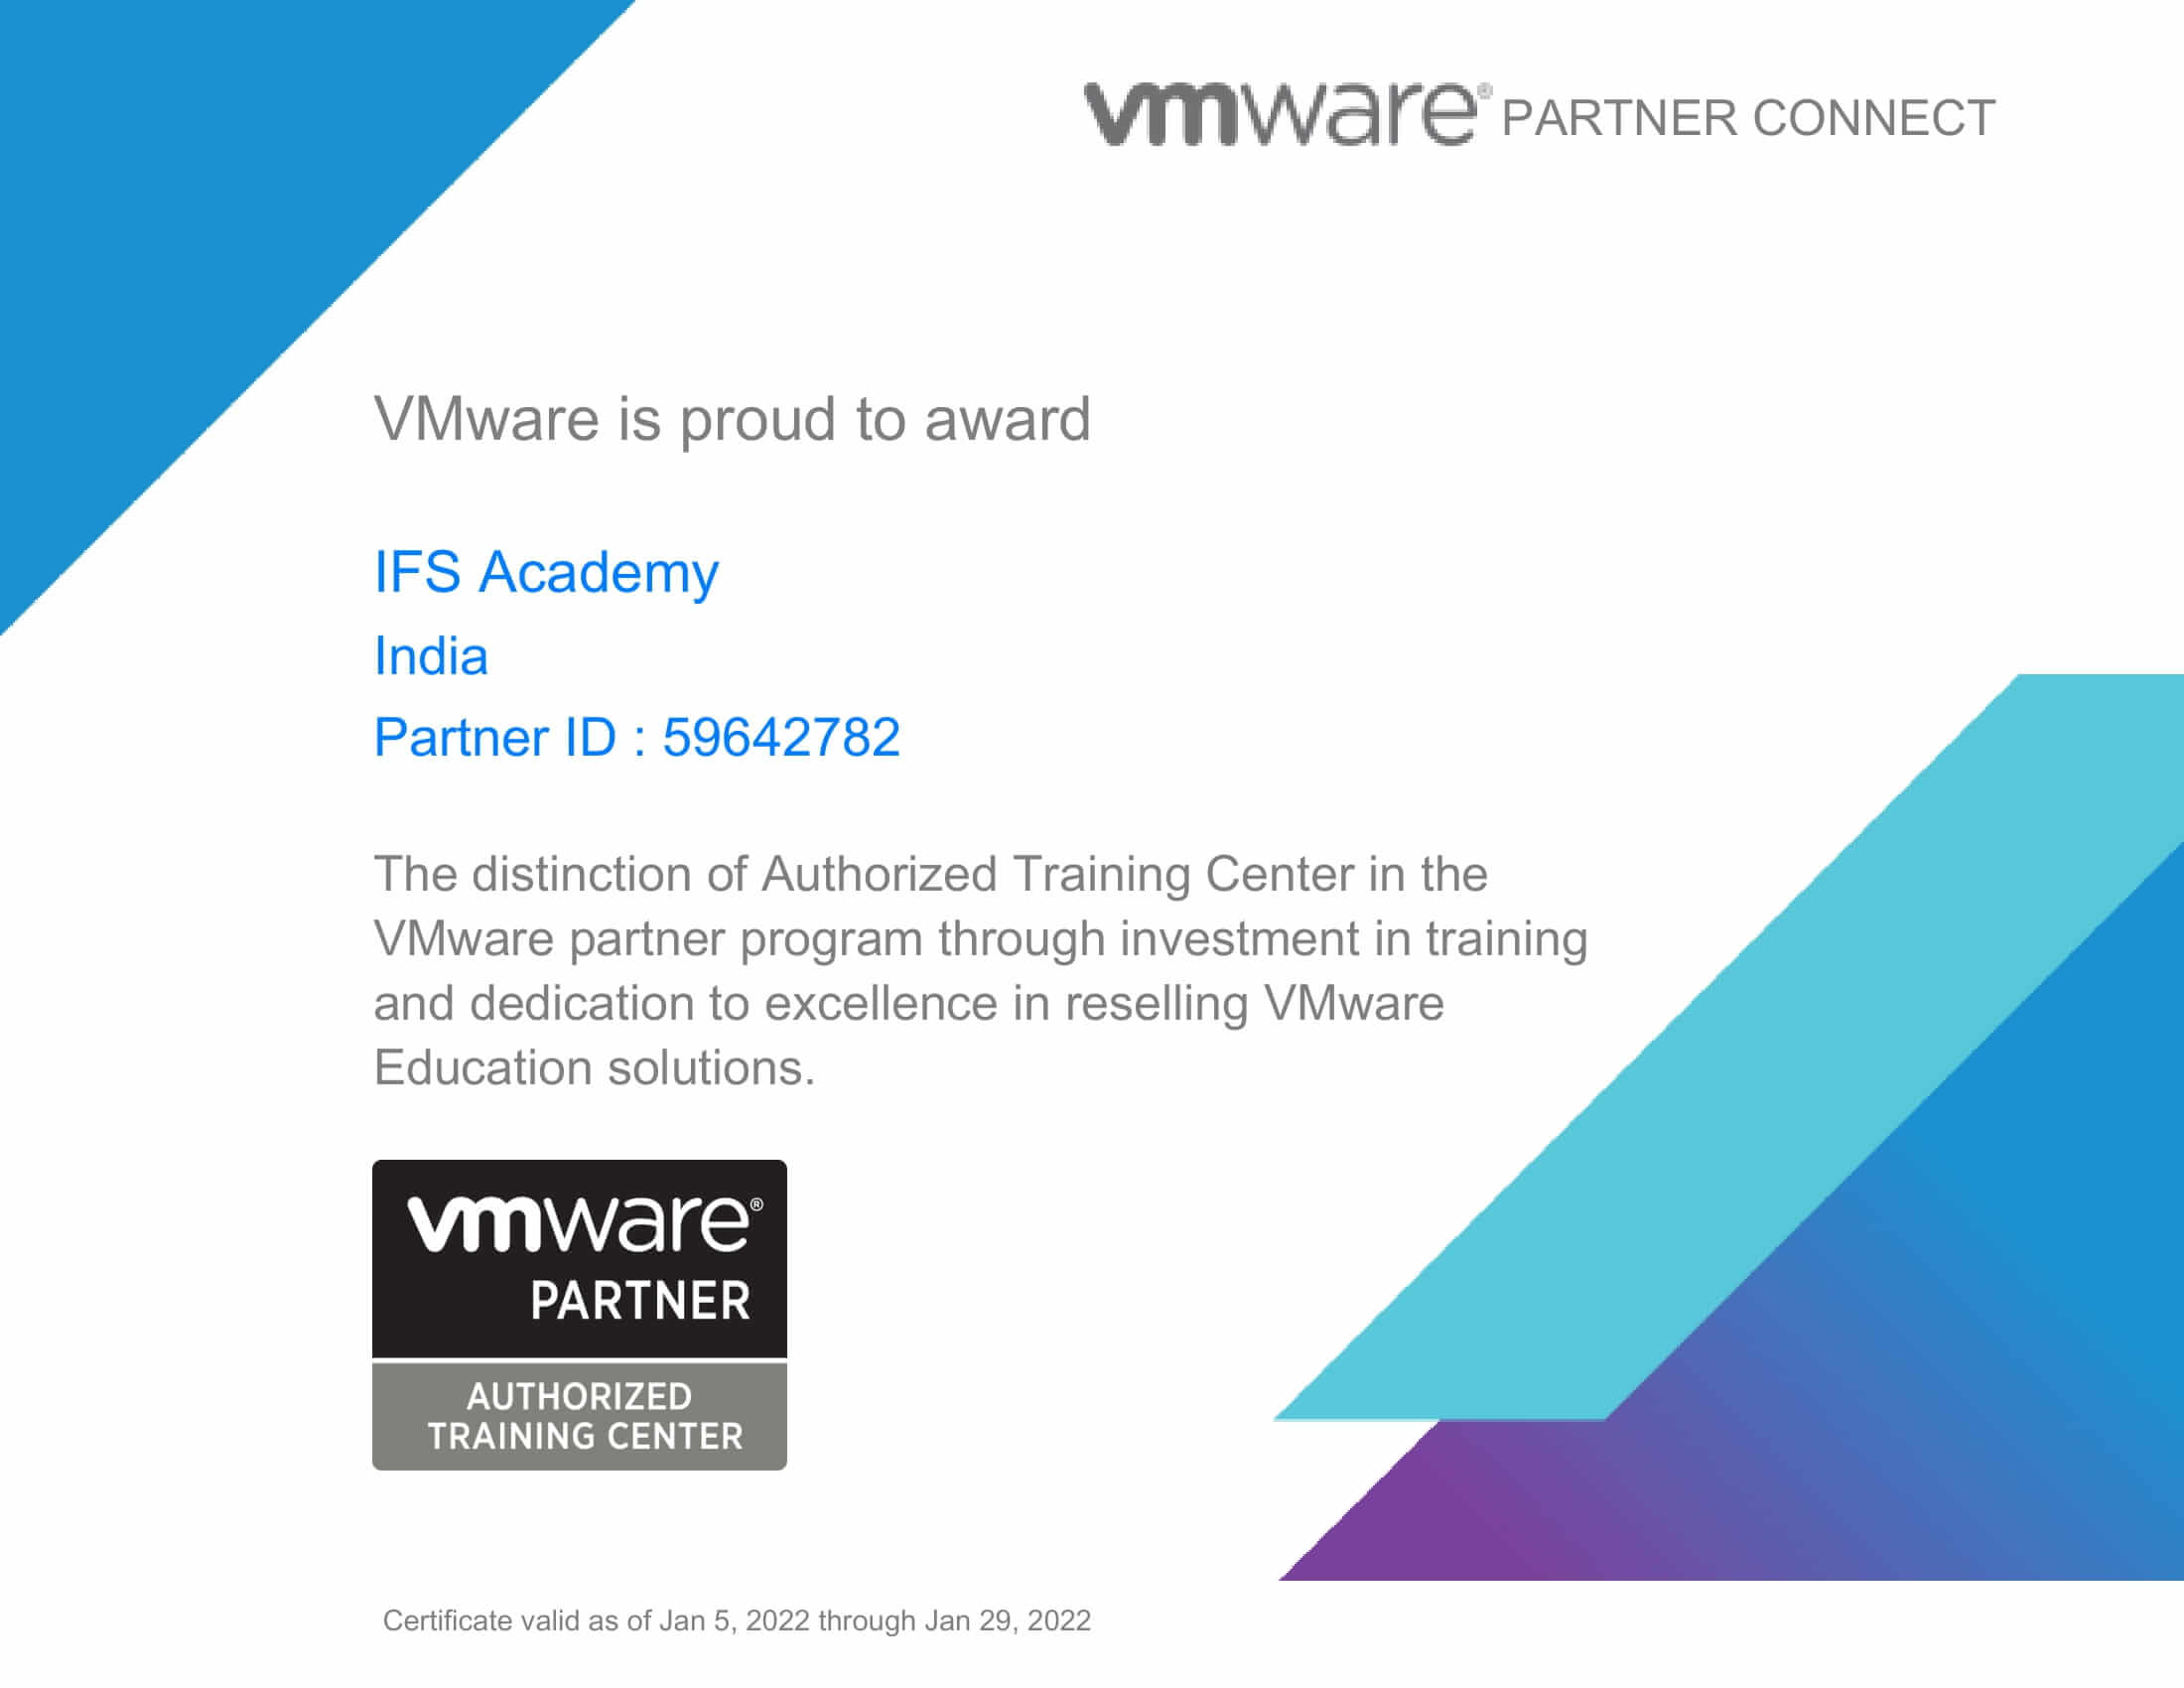 vmware-ATC-Certificate